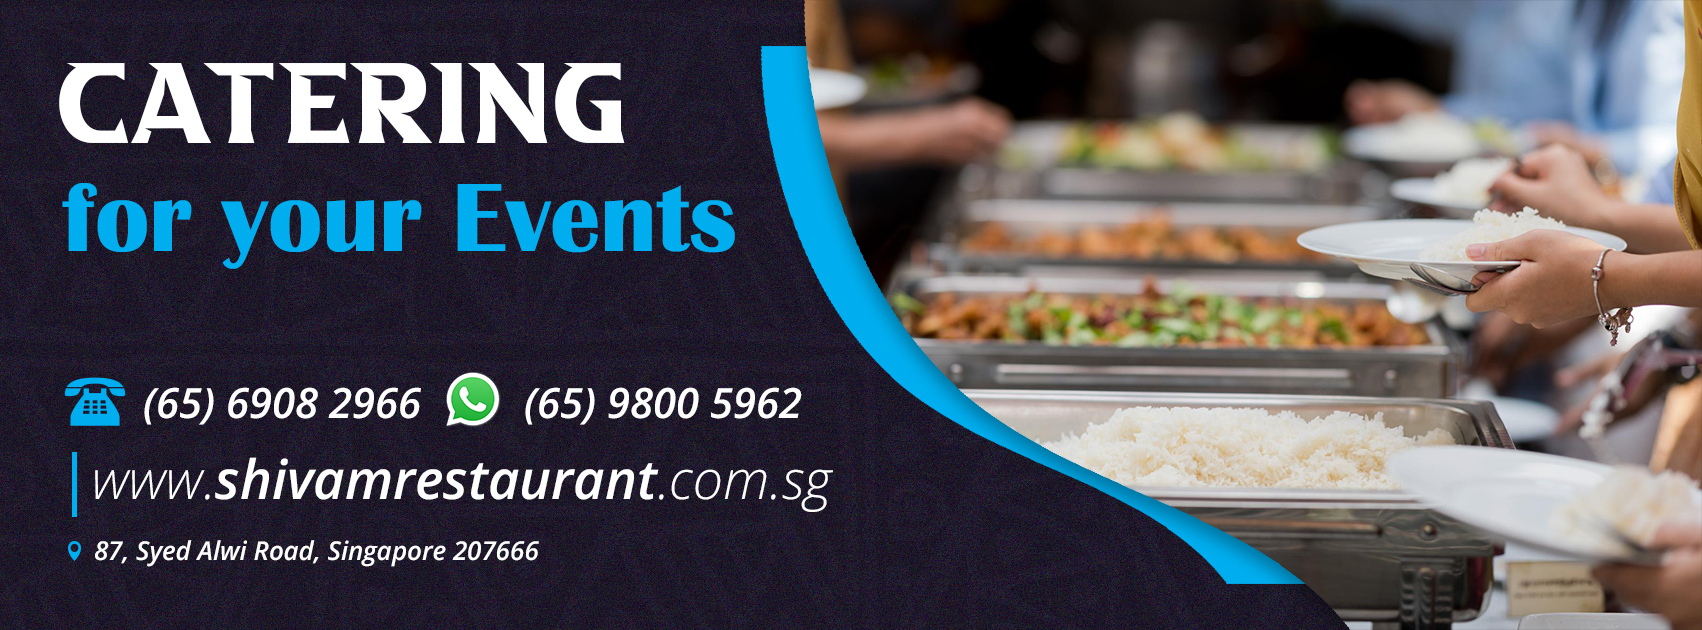 #1 Catering Services in Singapore - Shivam Restaurant